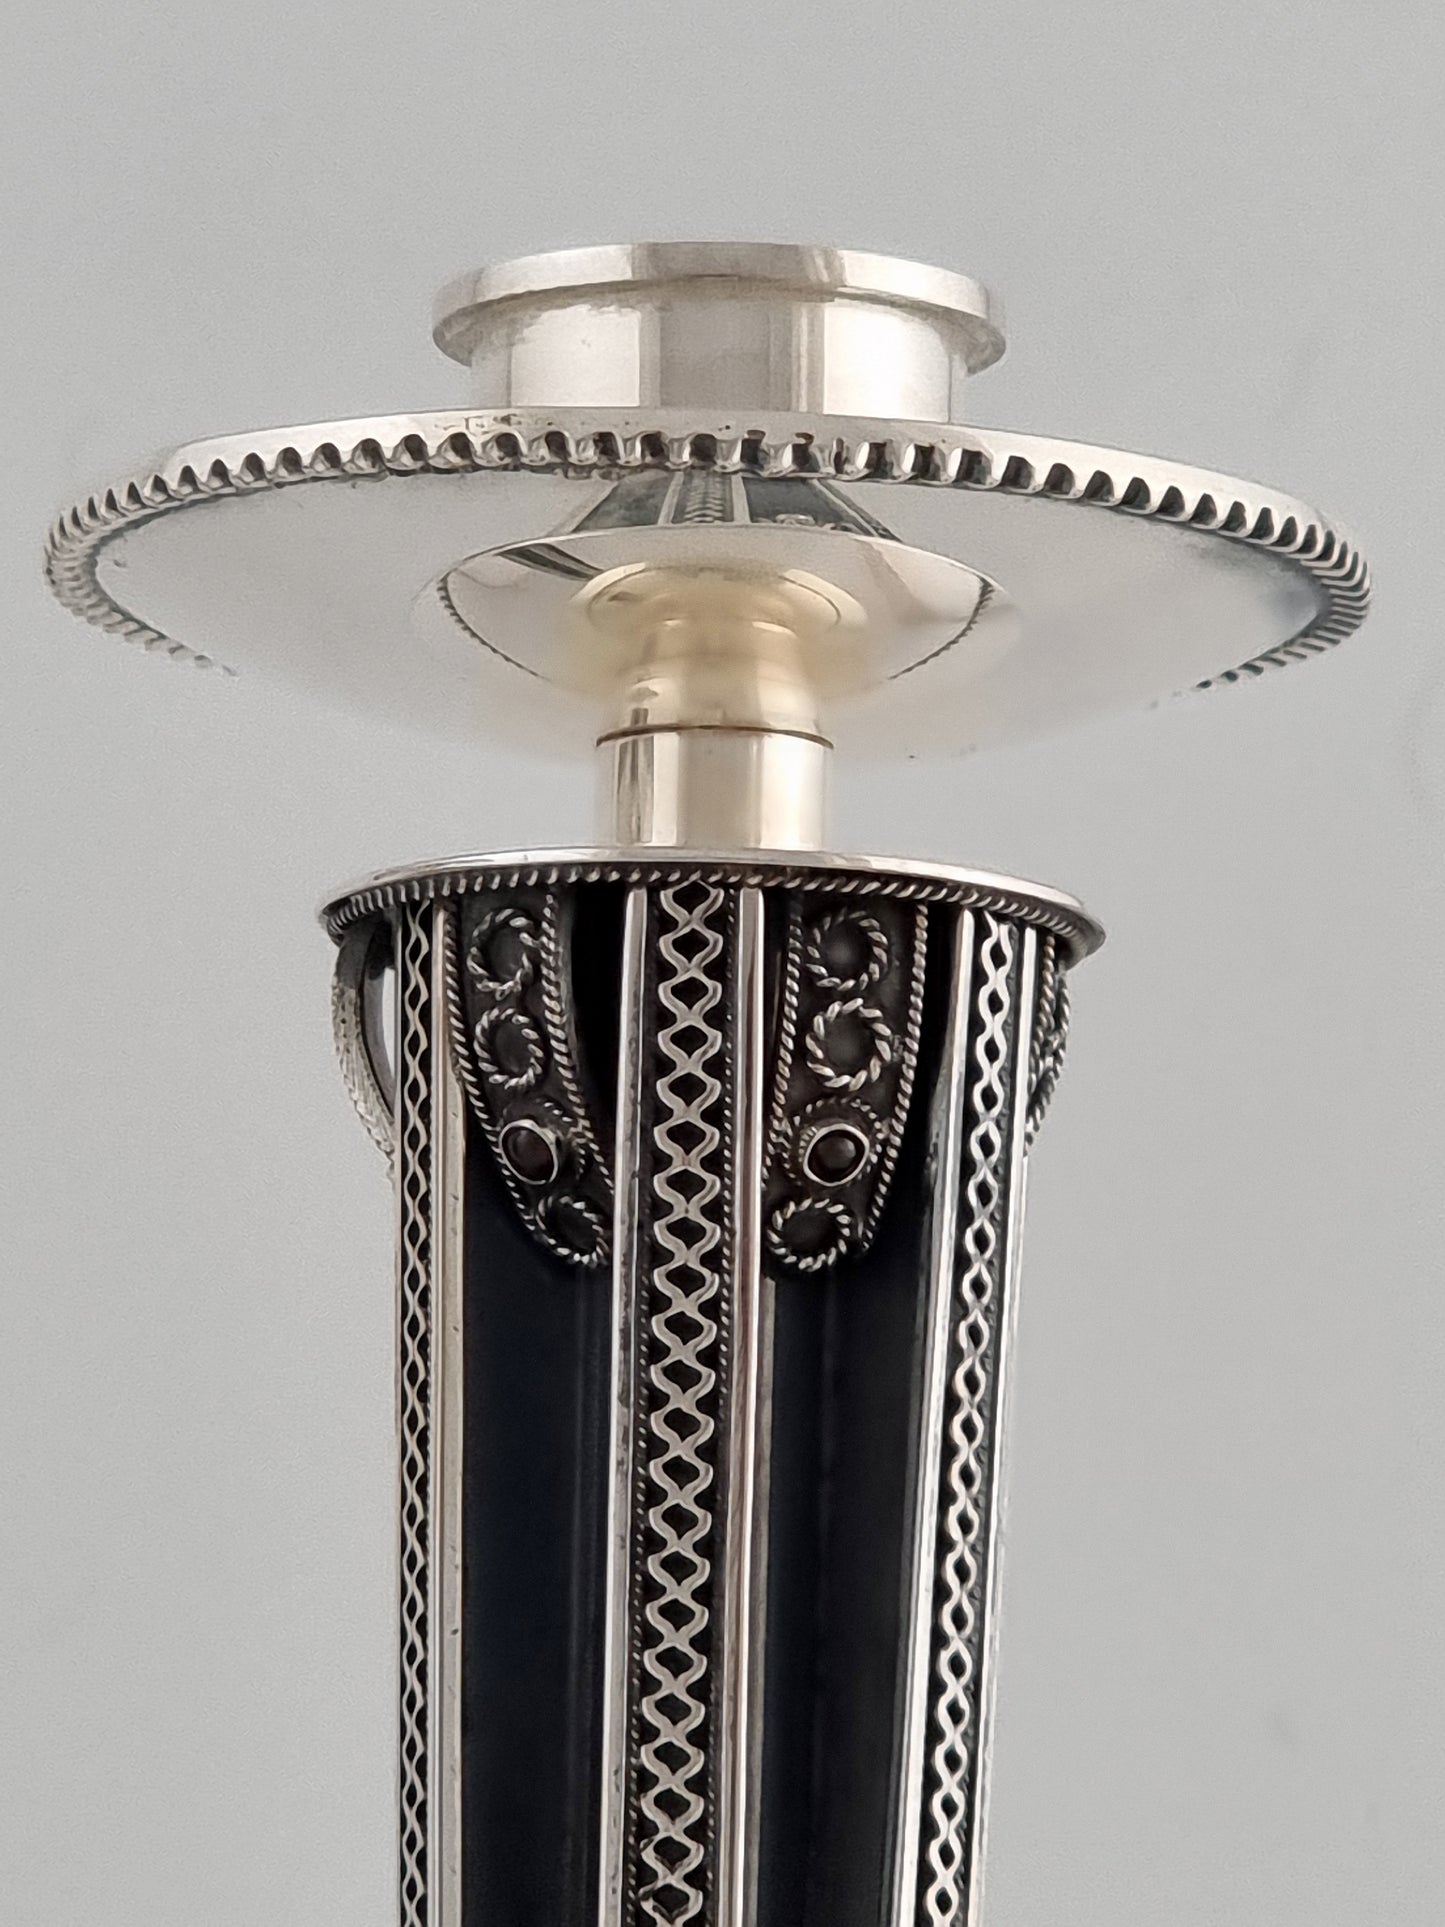 single Yemini candlestick reflecting upon its top.